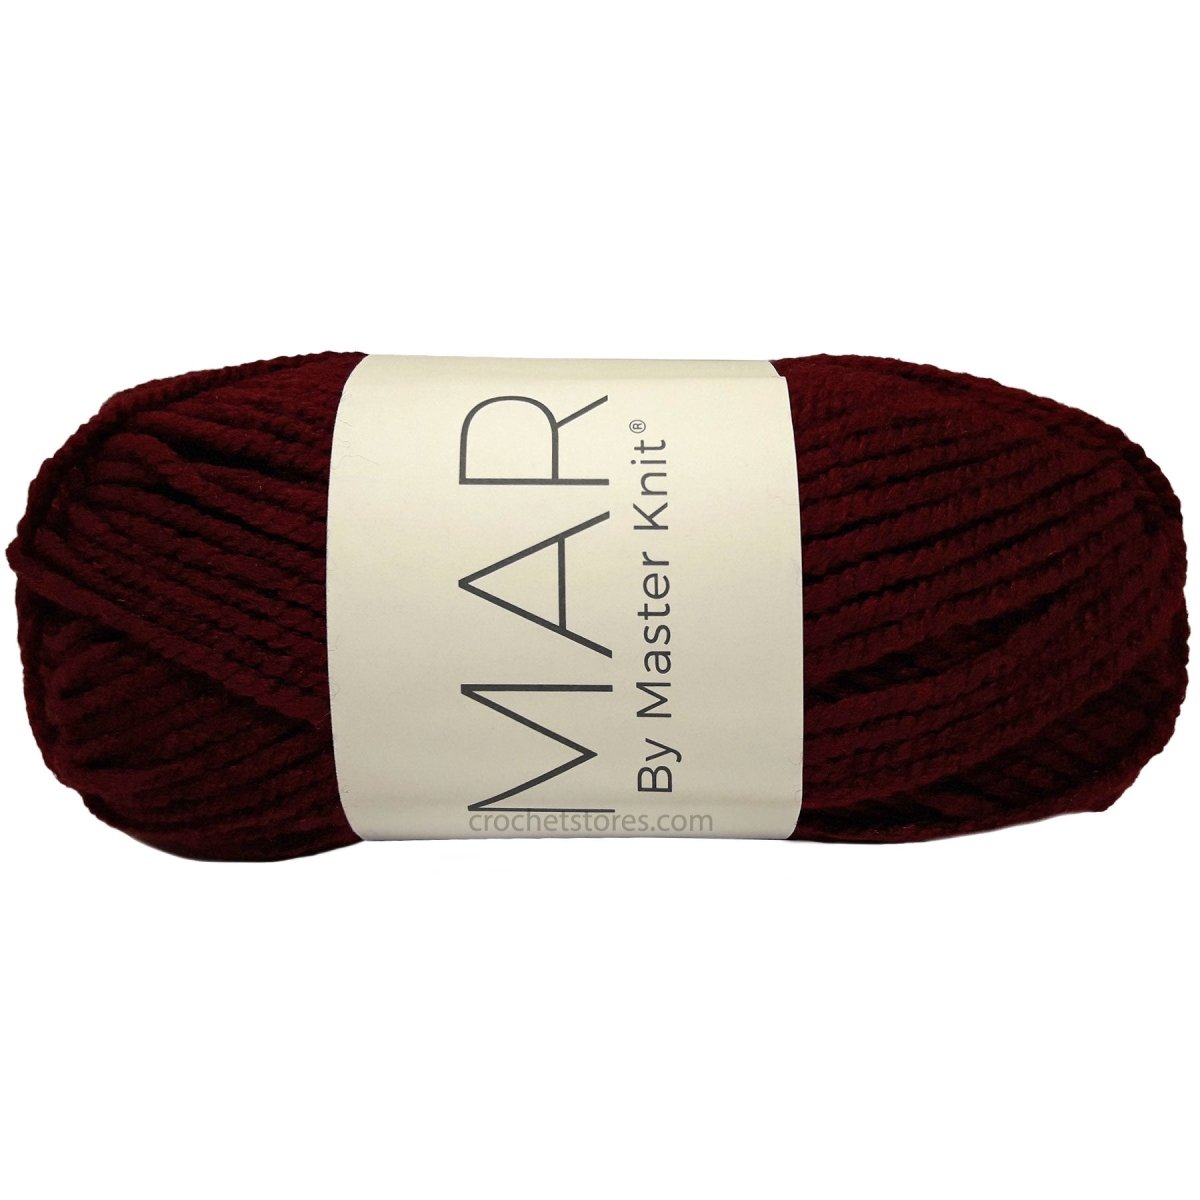 MAR - Chunky - Crochetstores9135-110745051438111